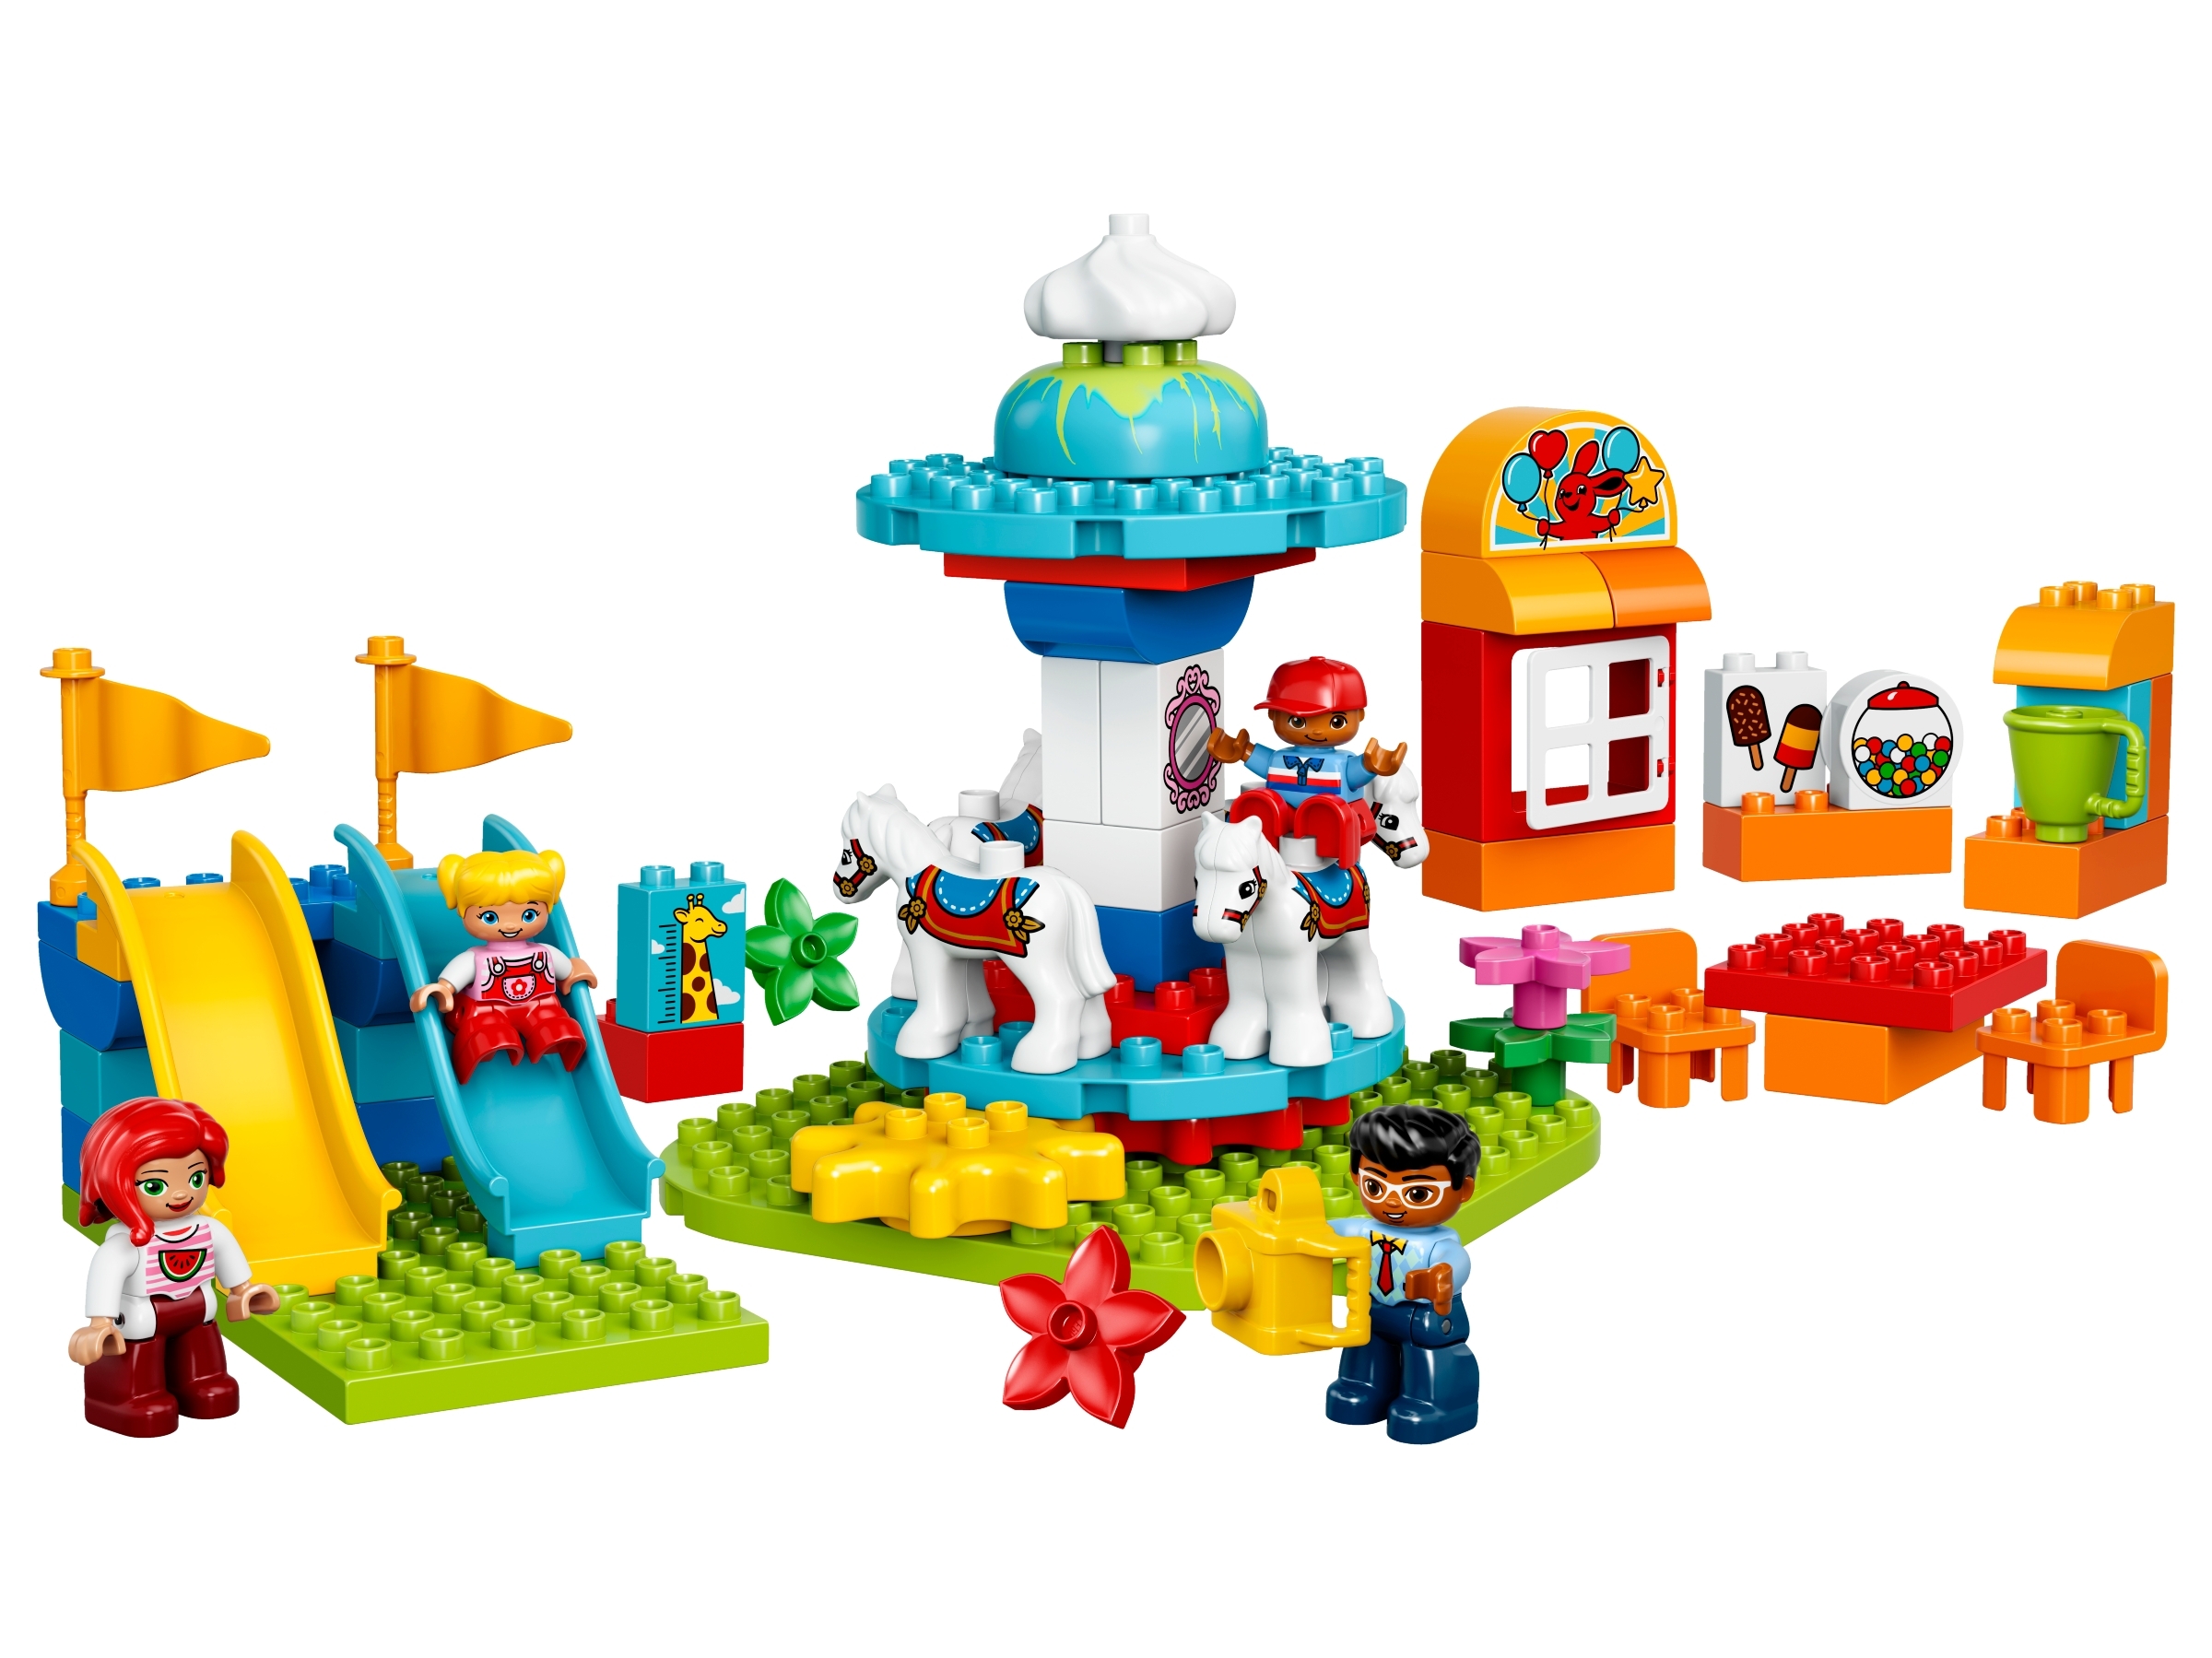 Fun Fair 10841 | DUPLO® | Buy online at Official LEGO® Shop US